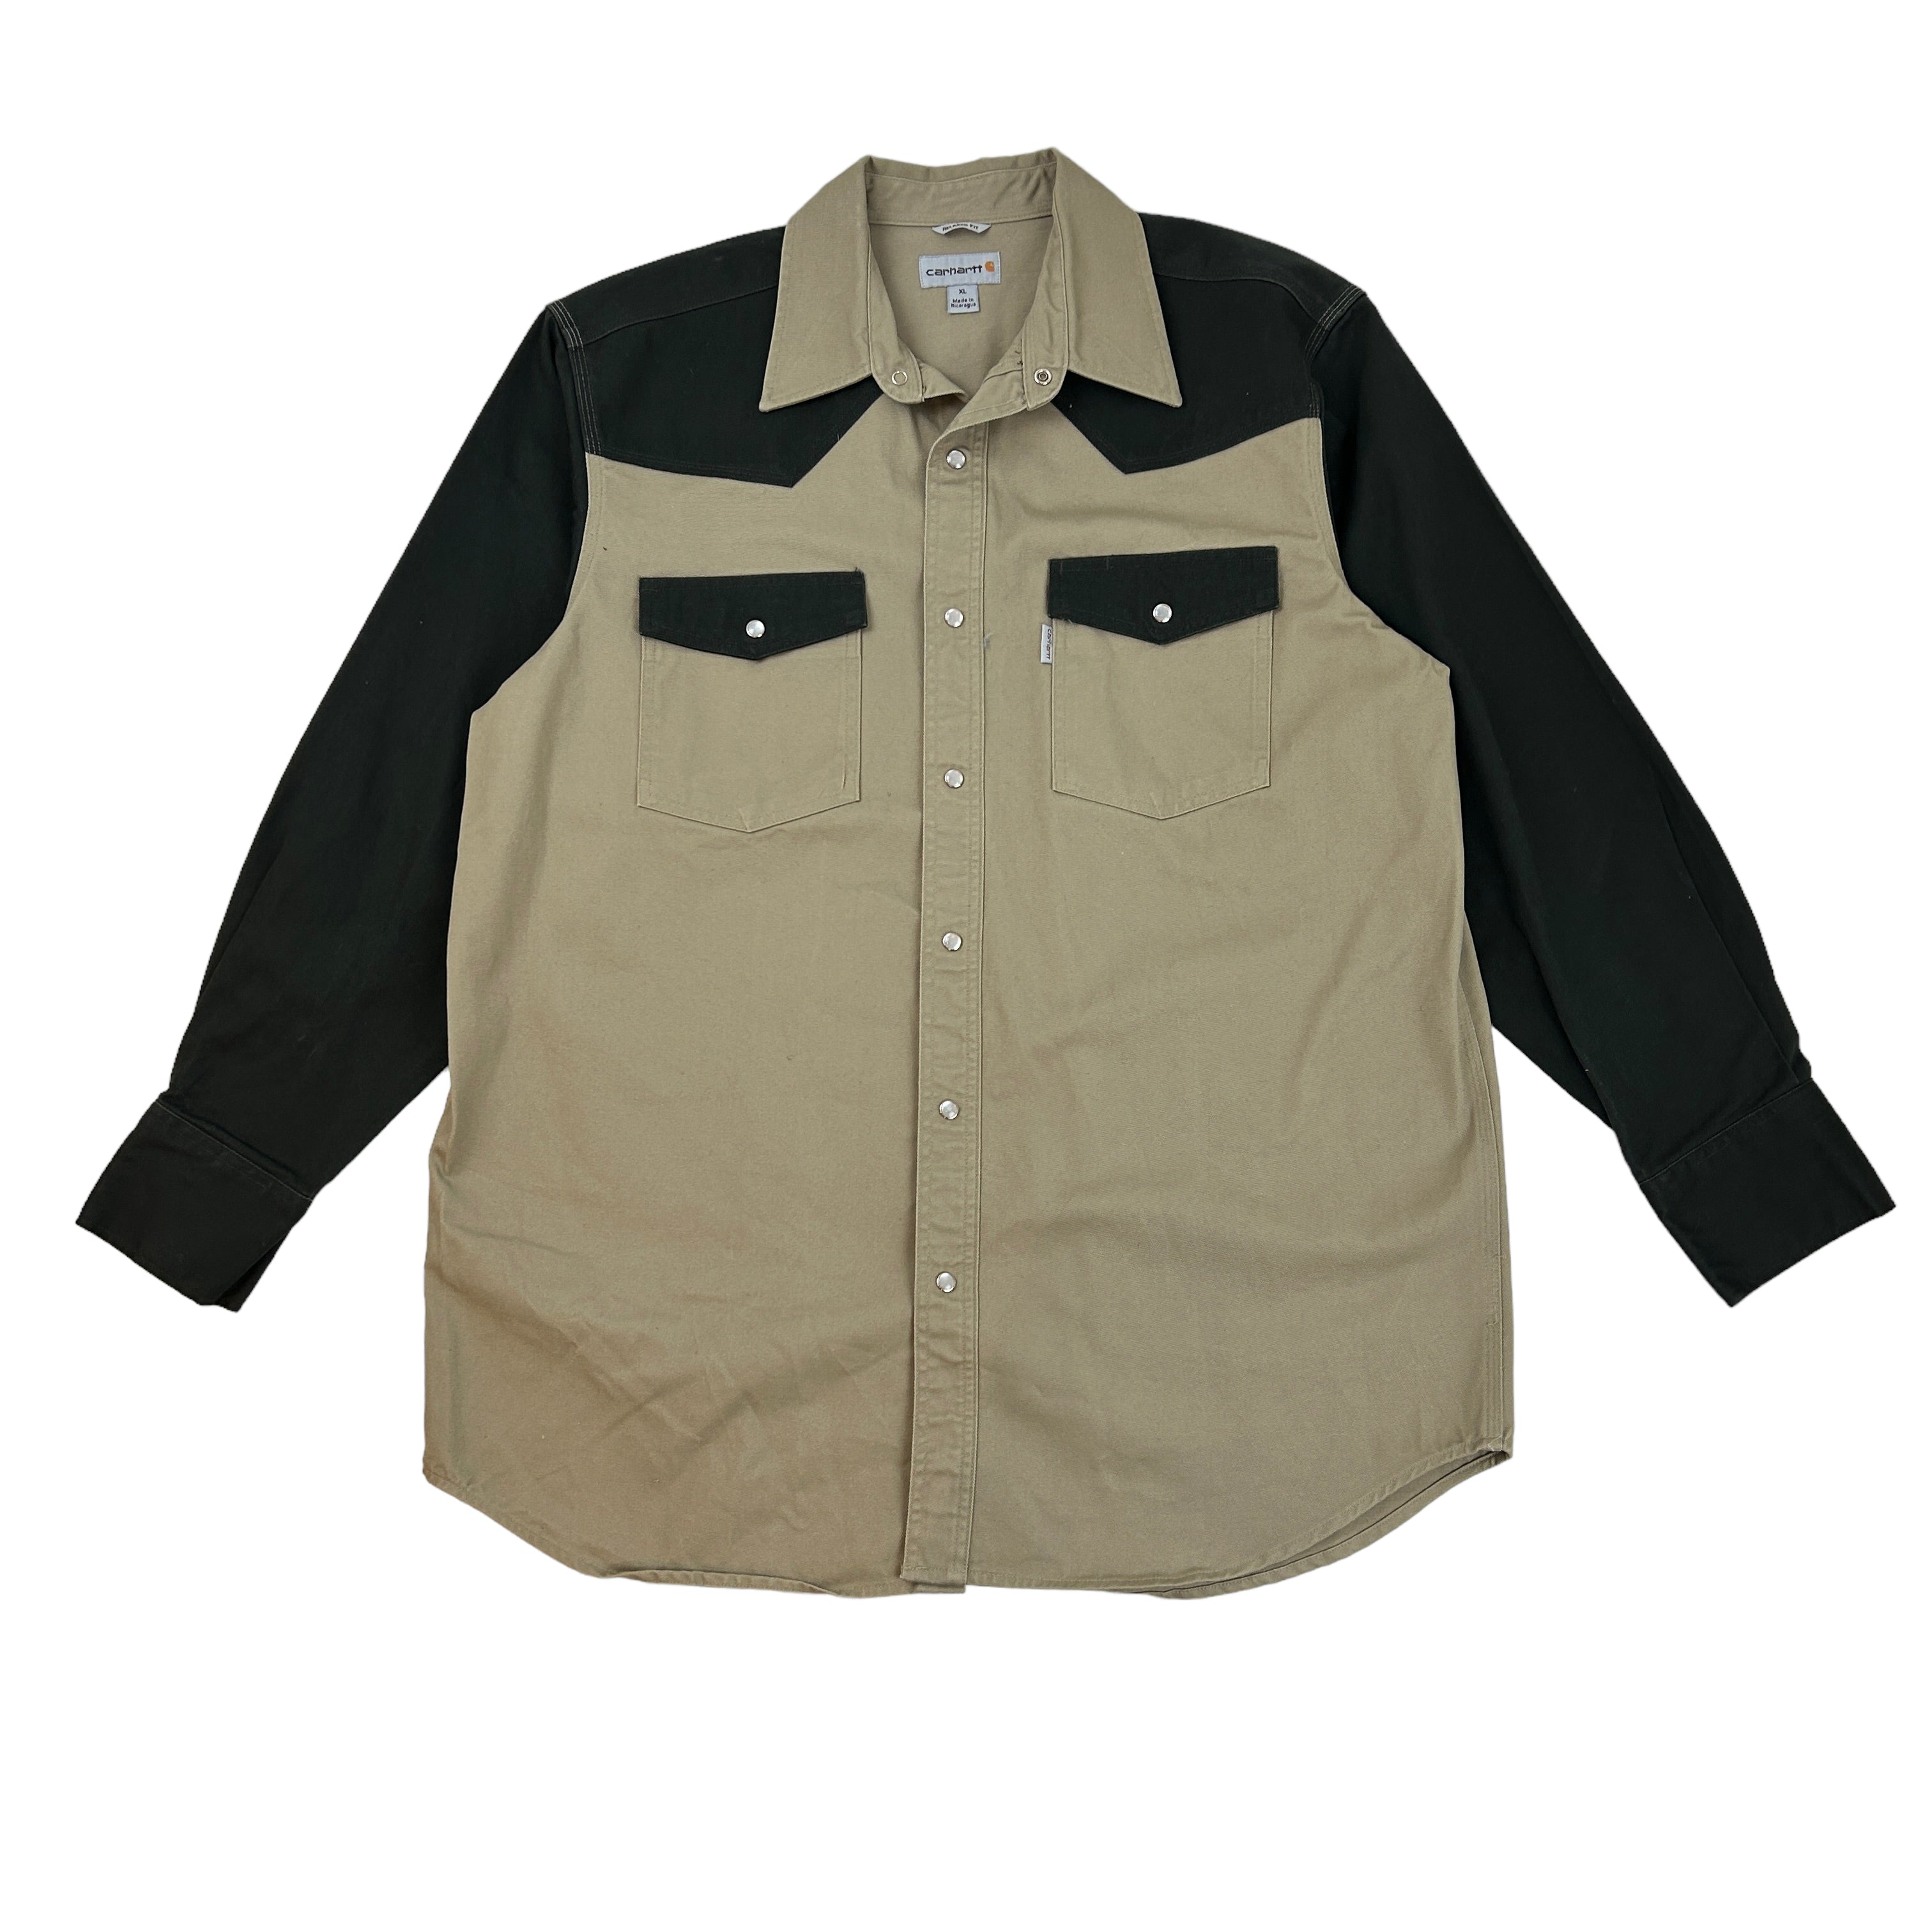 Vintage Carhart Button Up Shirt